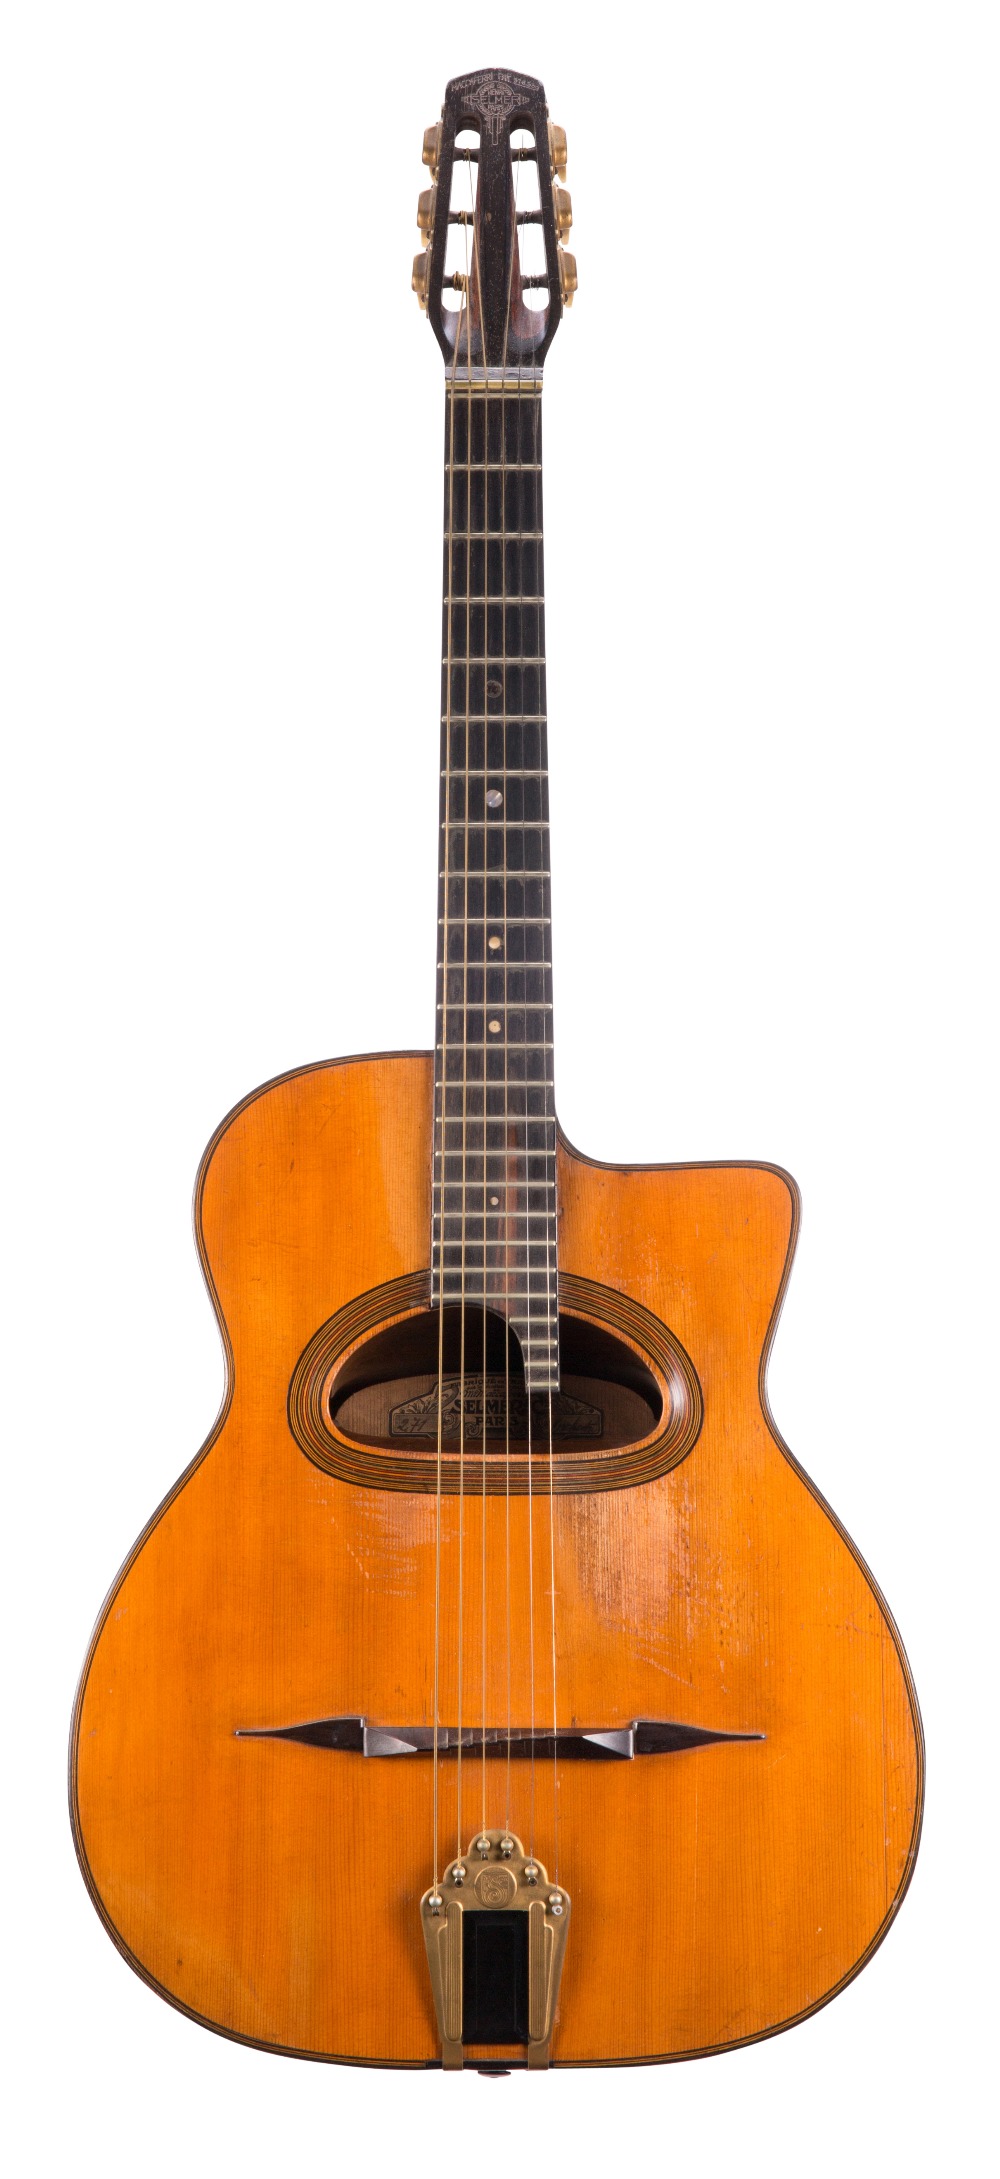 1933 Selmer Maccaferri Orchestra model acoustic jazz guitar, ser. no. 271, bearing Maccaferri Patent